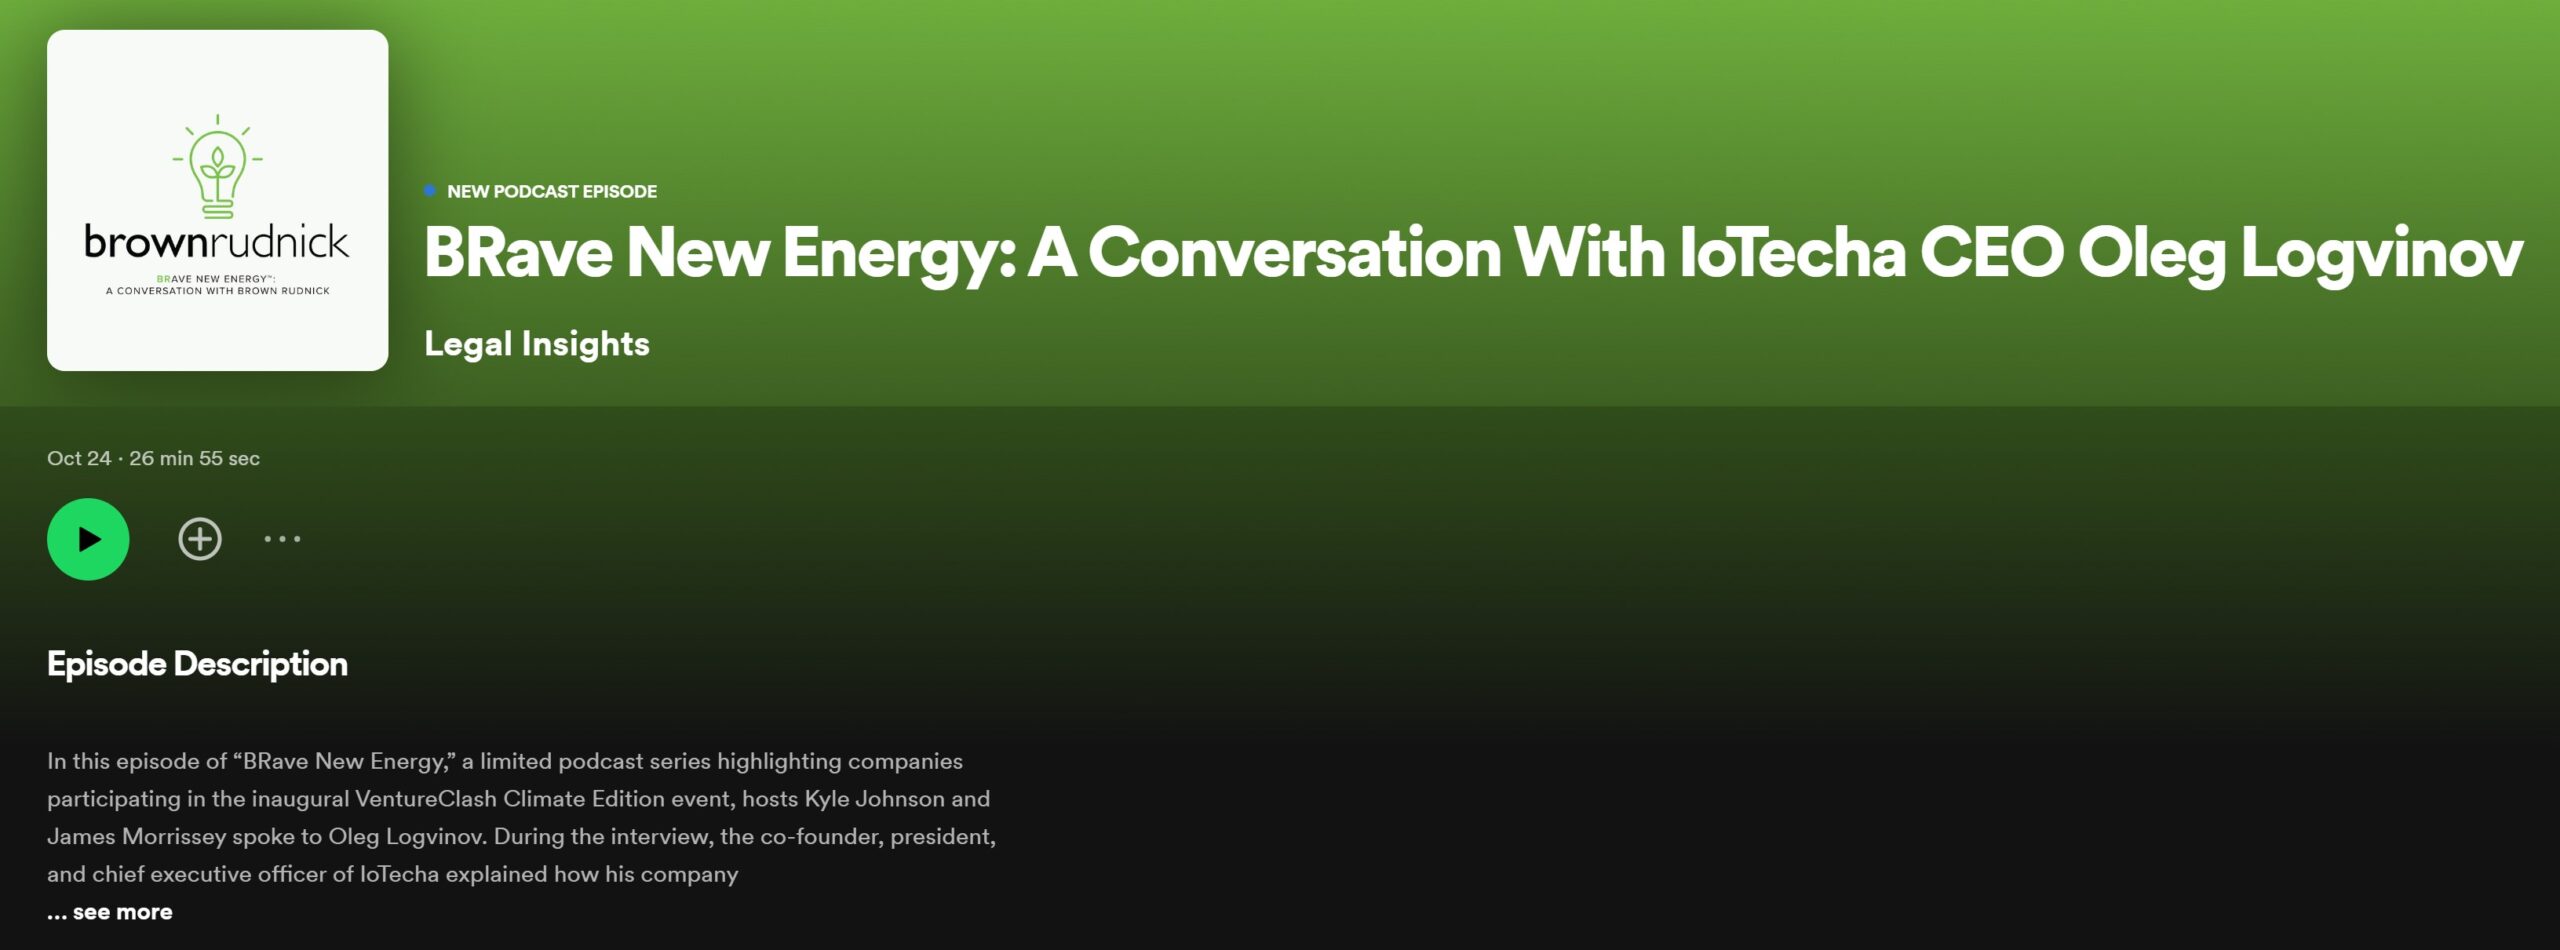 BRave New Energy: A Conversation With IoTecha CEO Oleg Logvinov.